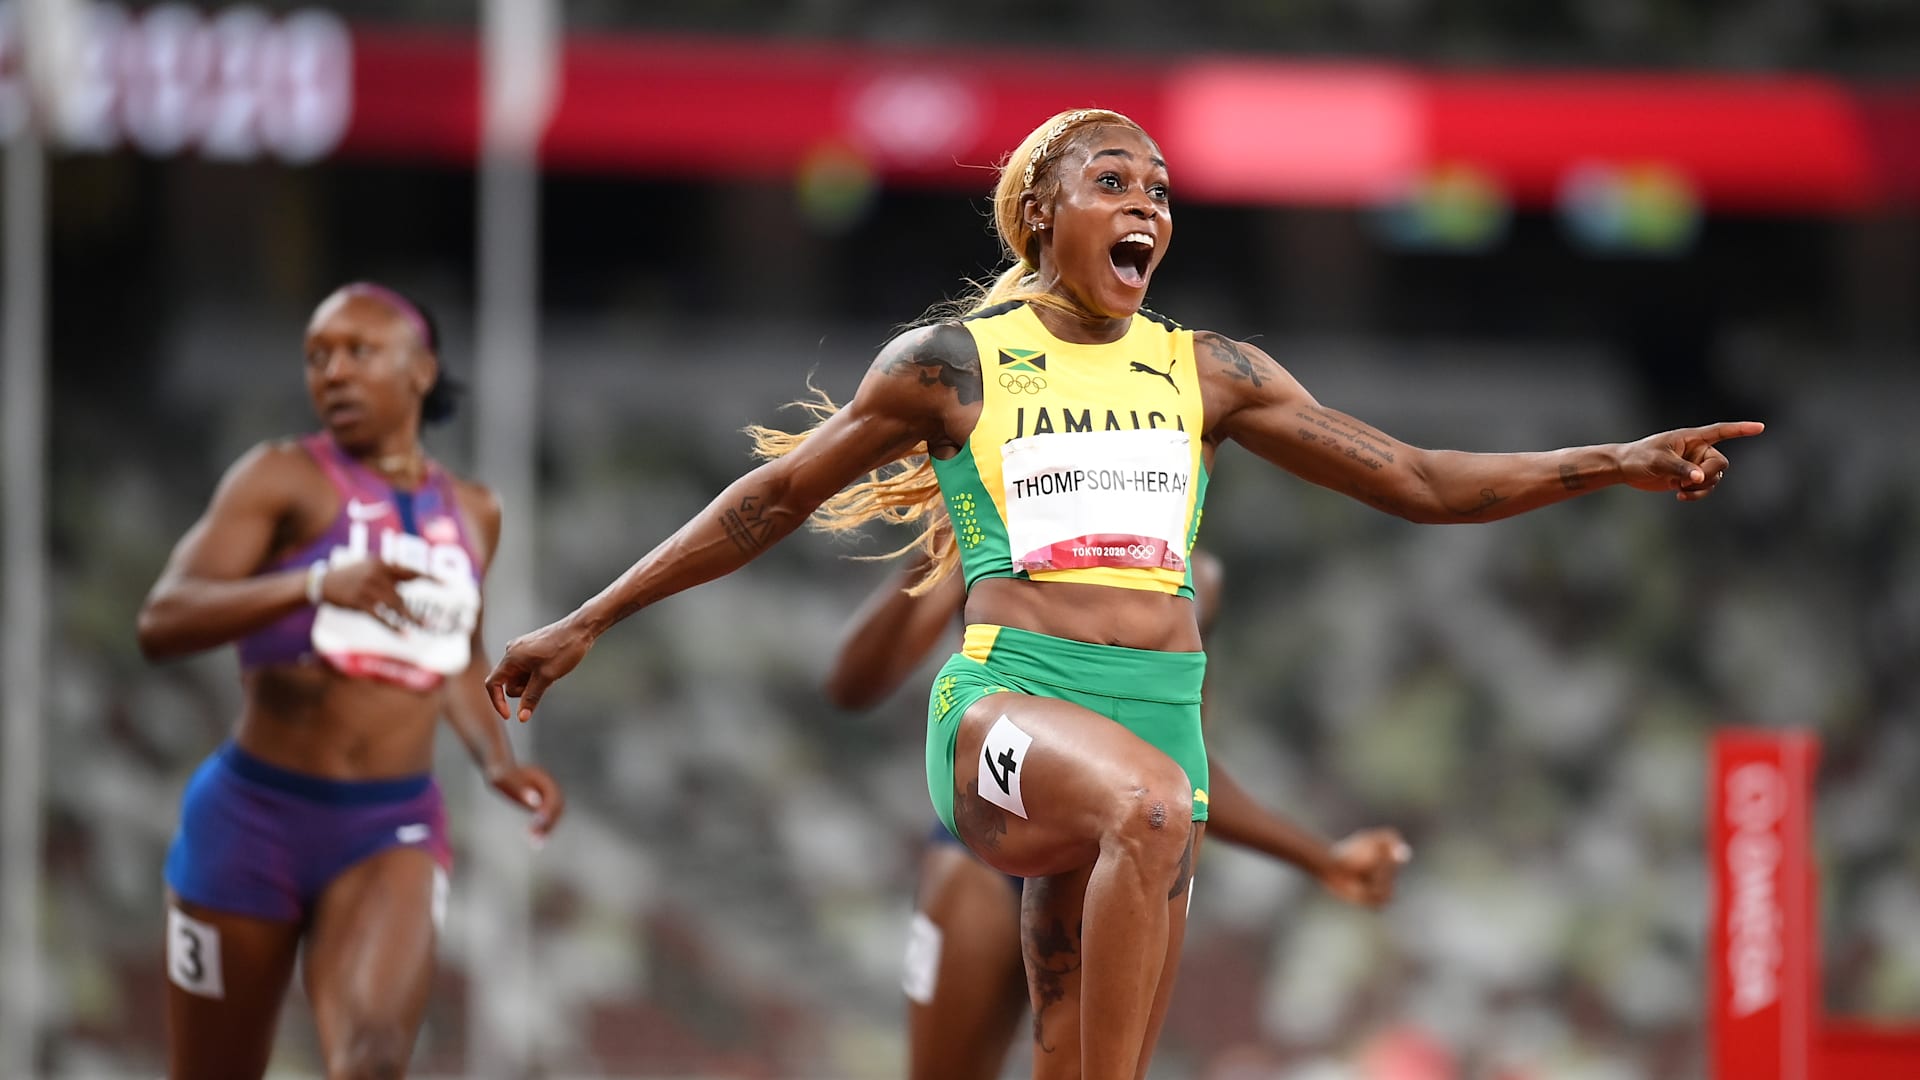 Elaine Thompson Herah Vince L Oro Dei 100m Piani Femminili A Tokyo 2020